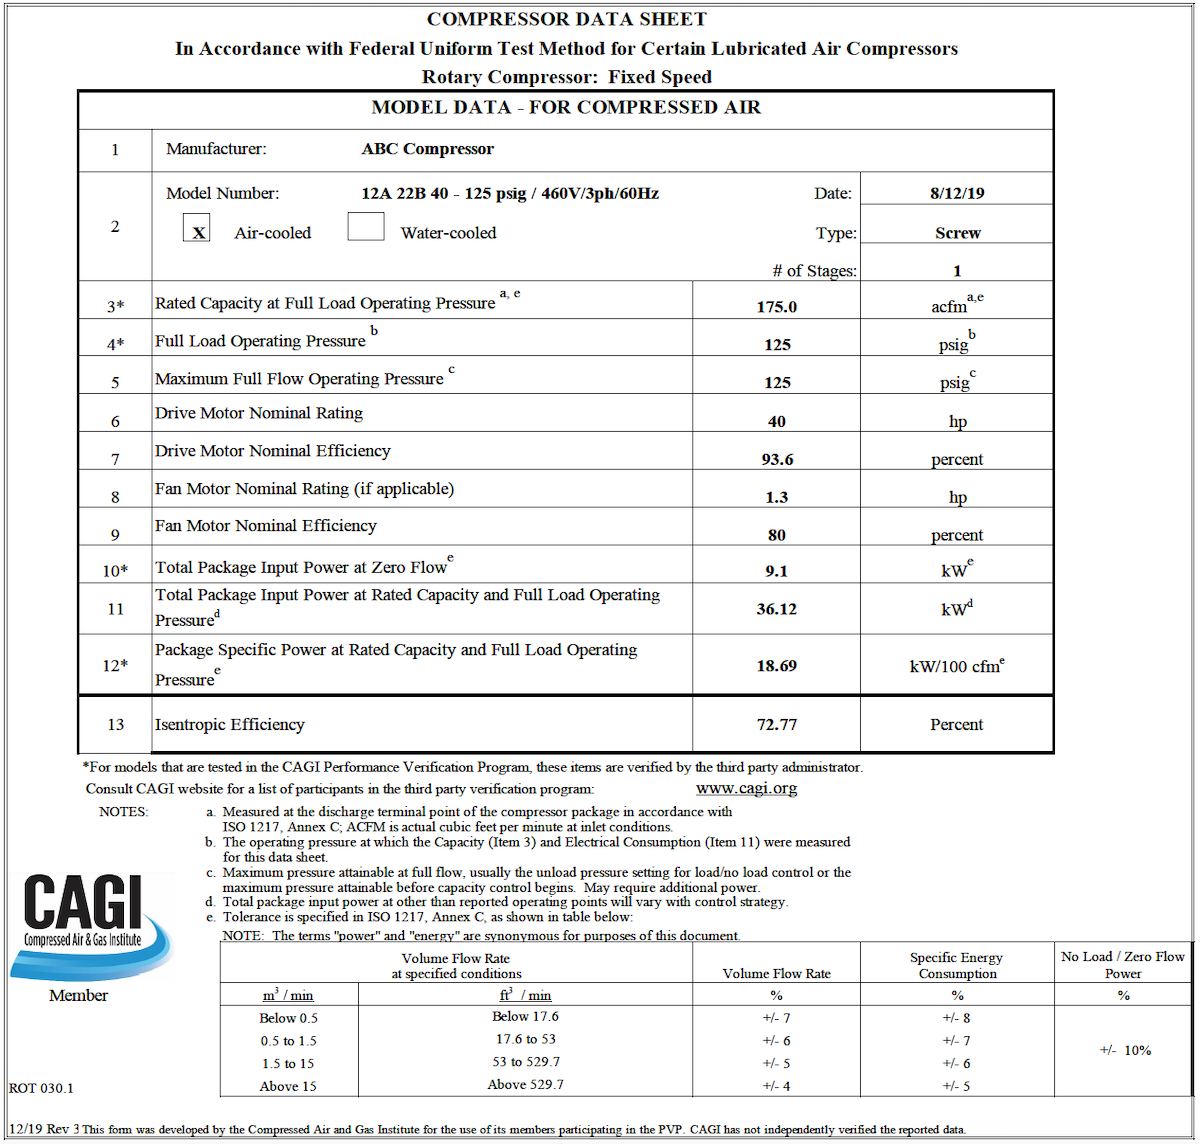 Sample CAGI Data Sheet